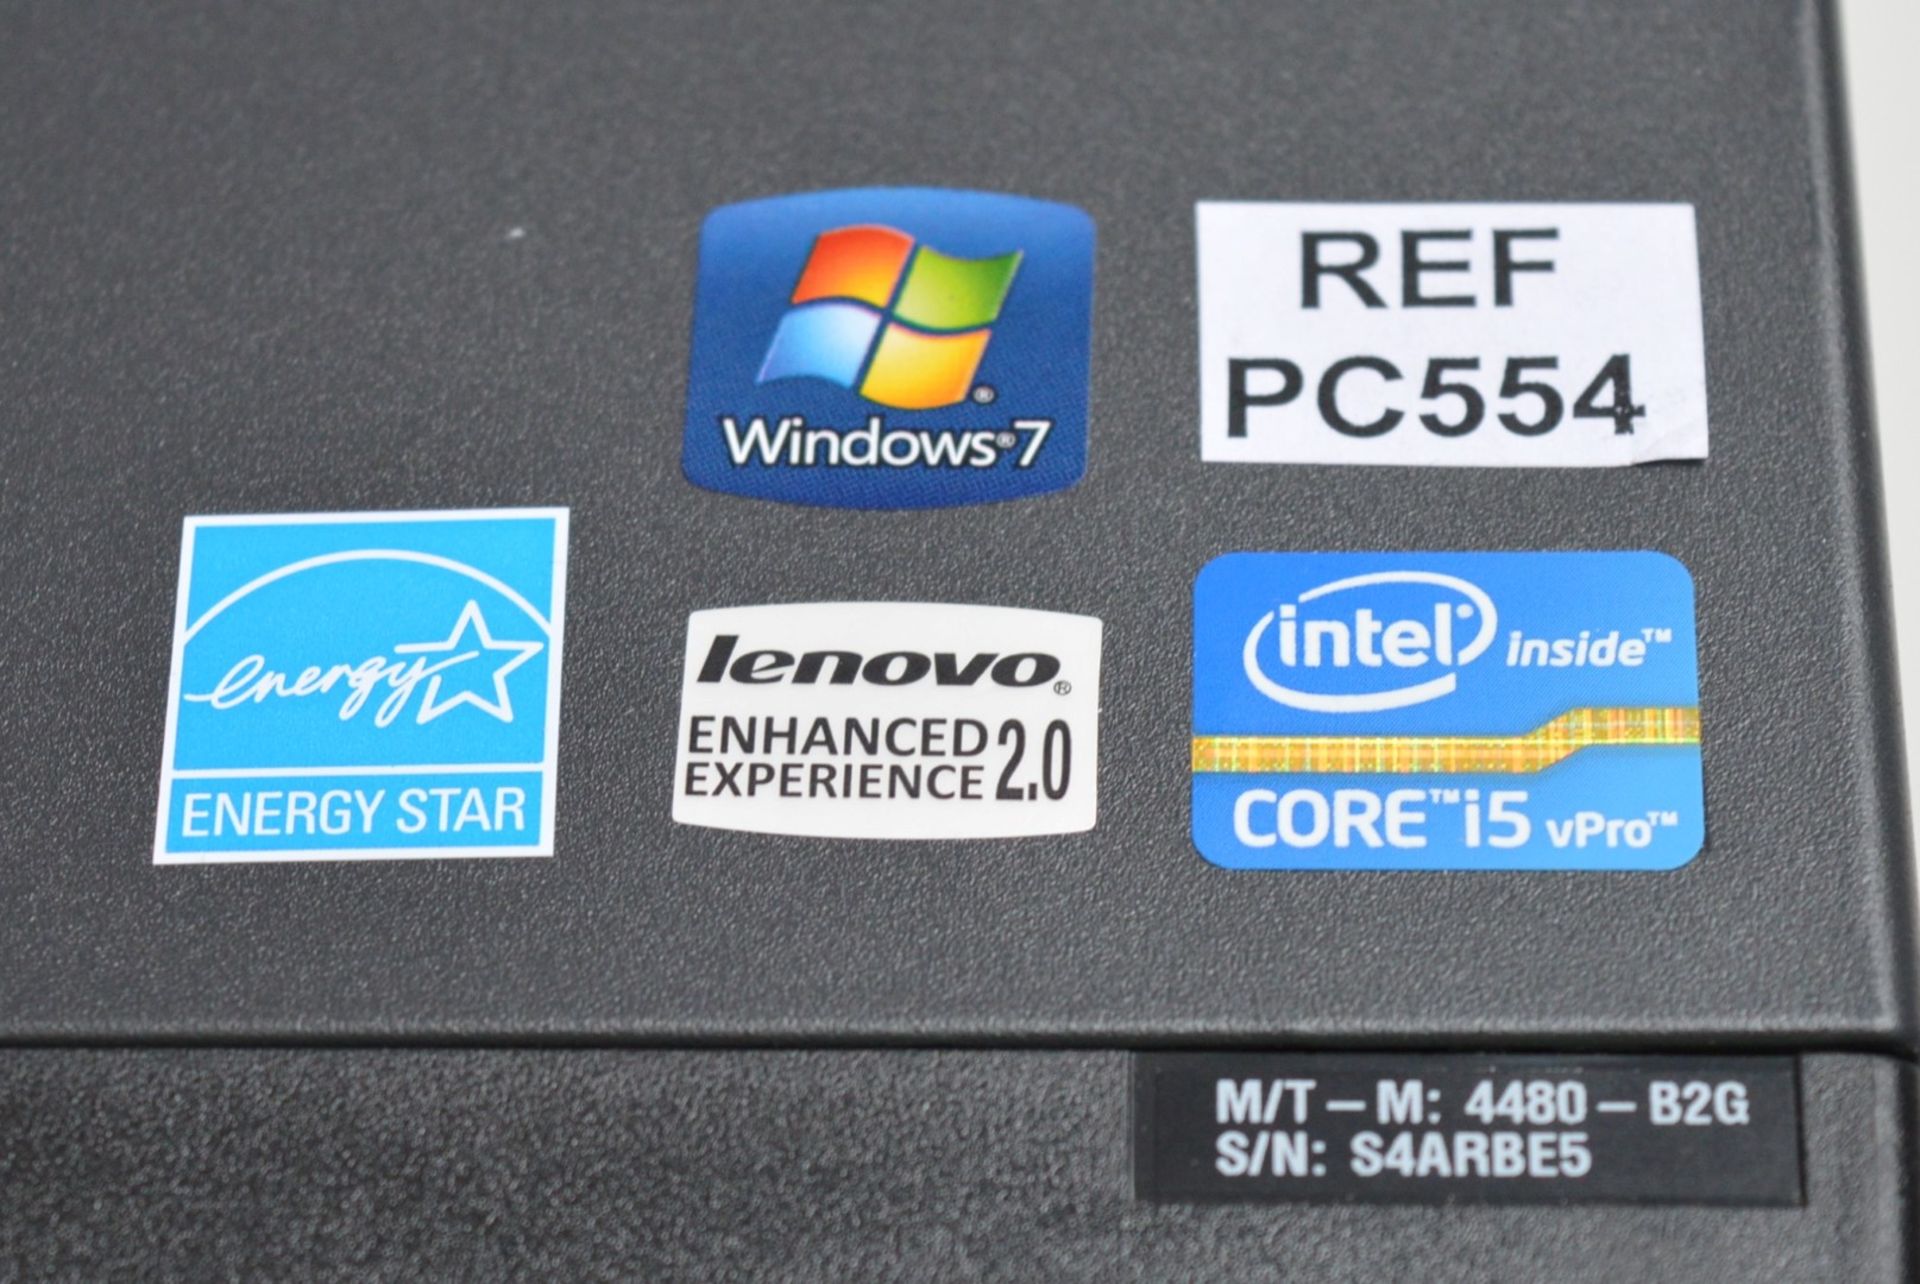 1 x Lenovo ThinkCentre SFF Desktop Computer - Intel Core i5-2400 3.1ghz Processor, 4gb DDR3 Ram, - Image 4 of 6